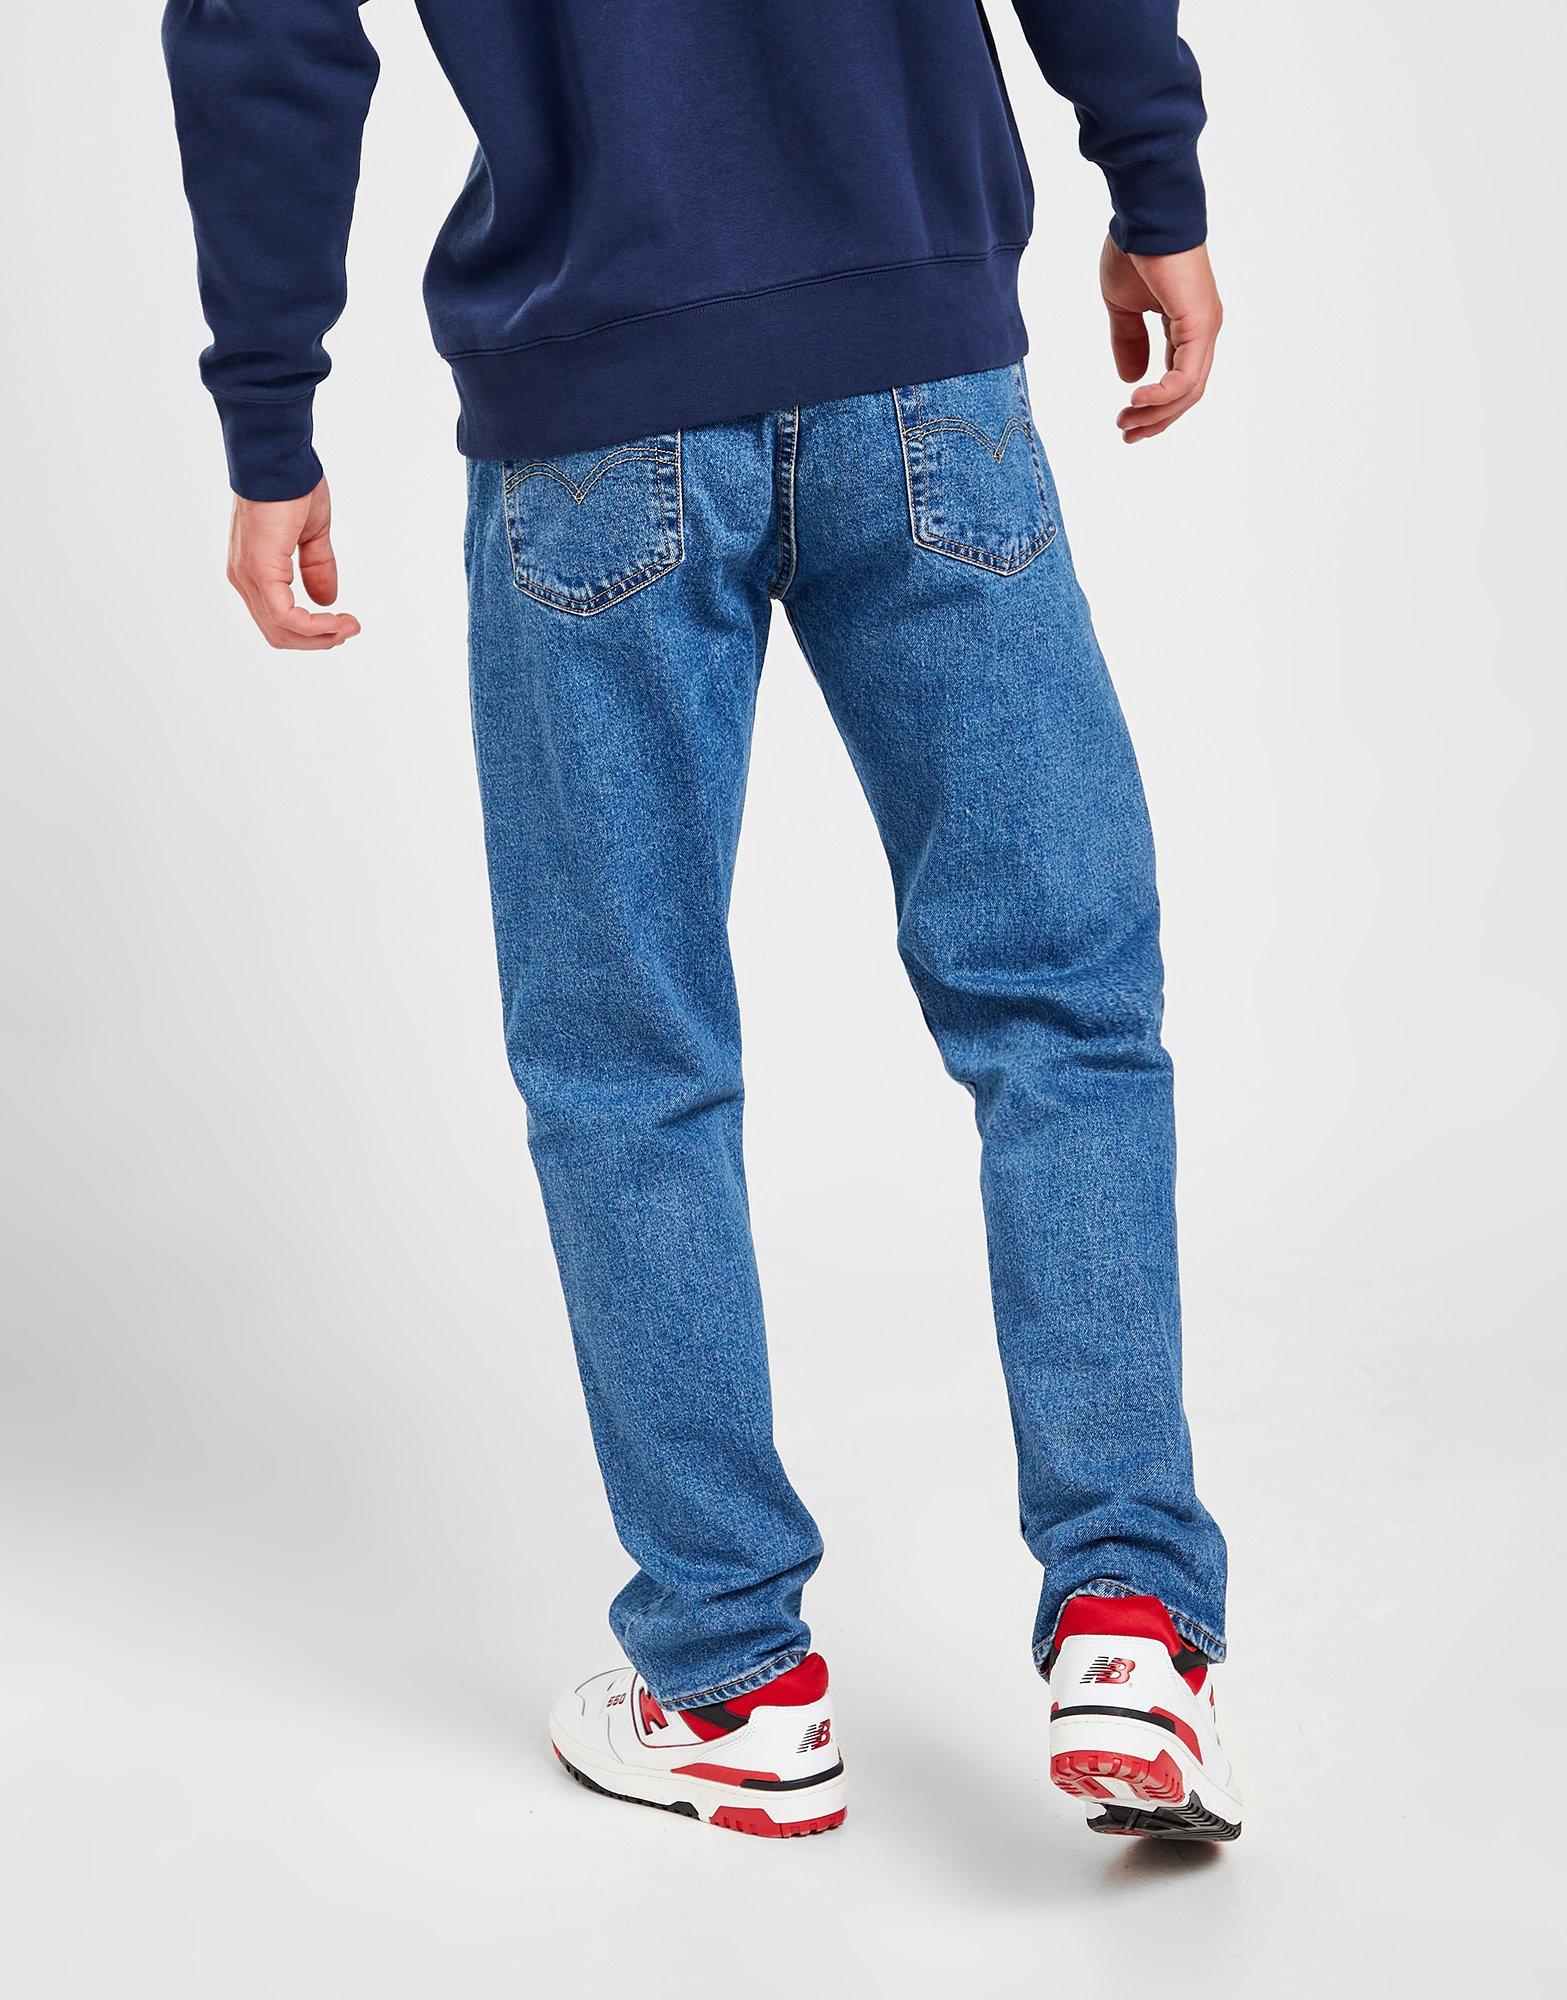 discount 94% Blue 46                  EU MEN FASHION Jeans Worn-in Tdk shorts jeans 